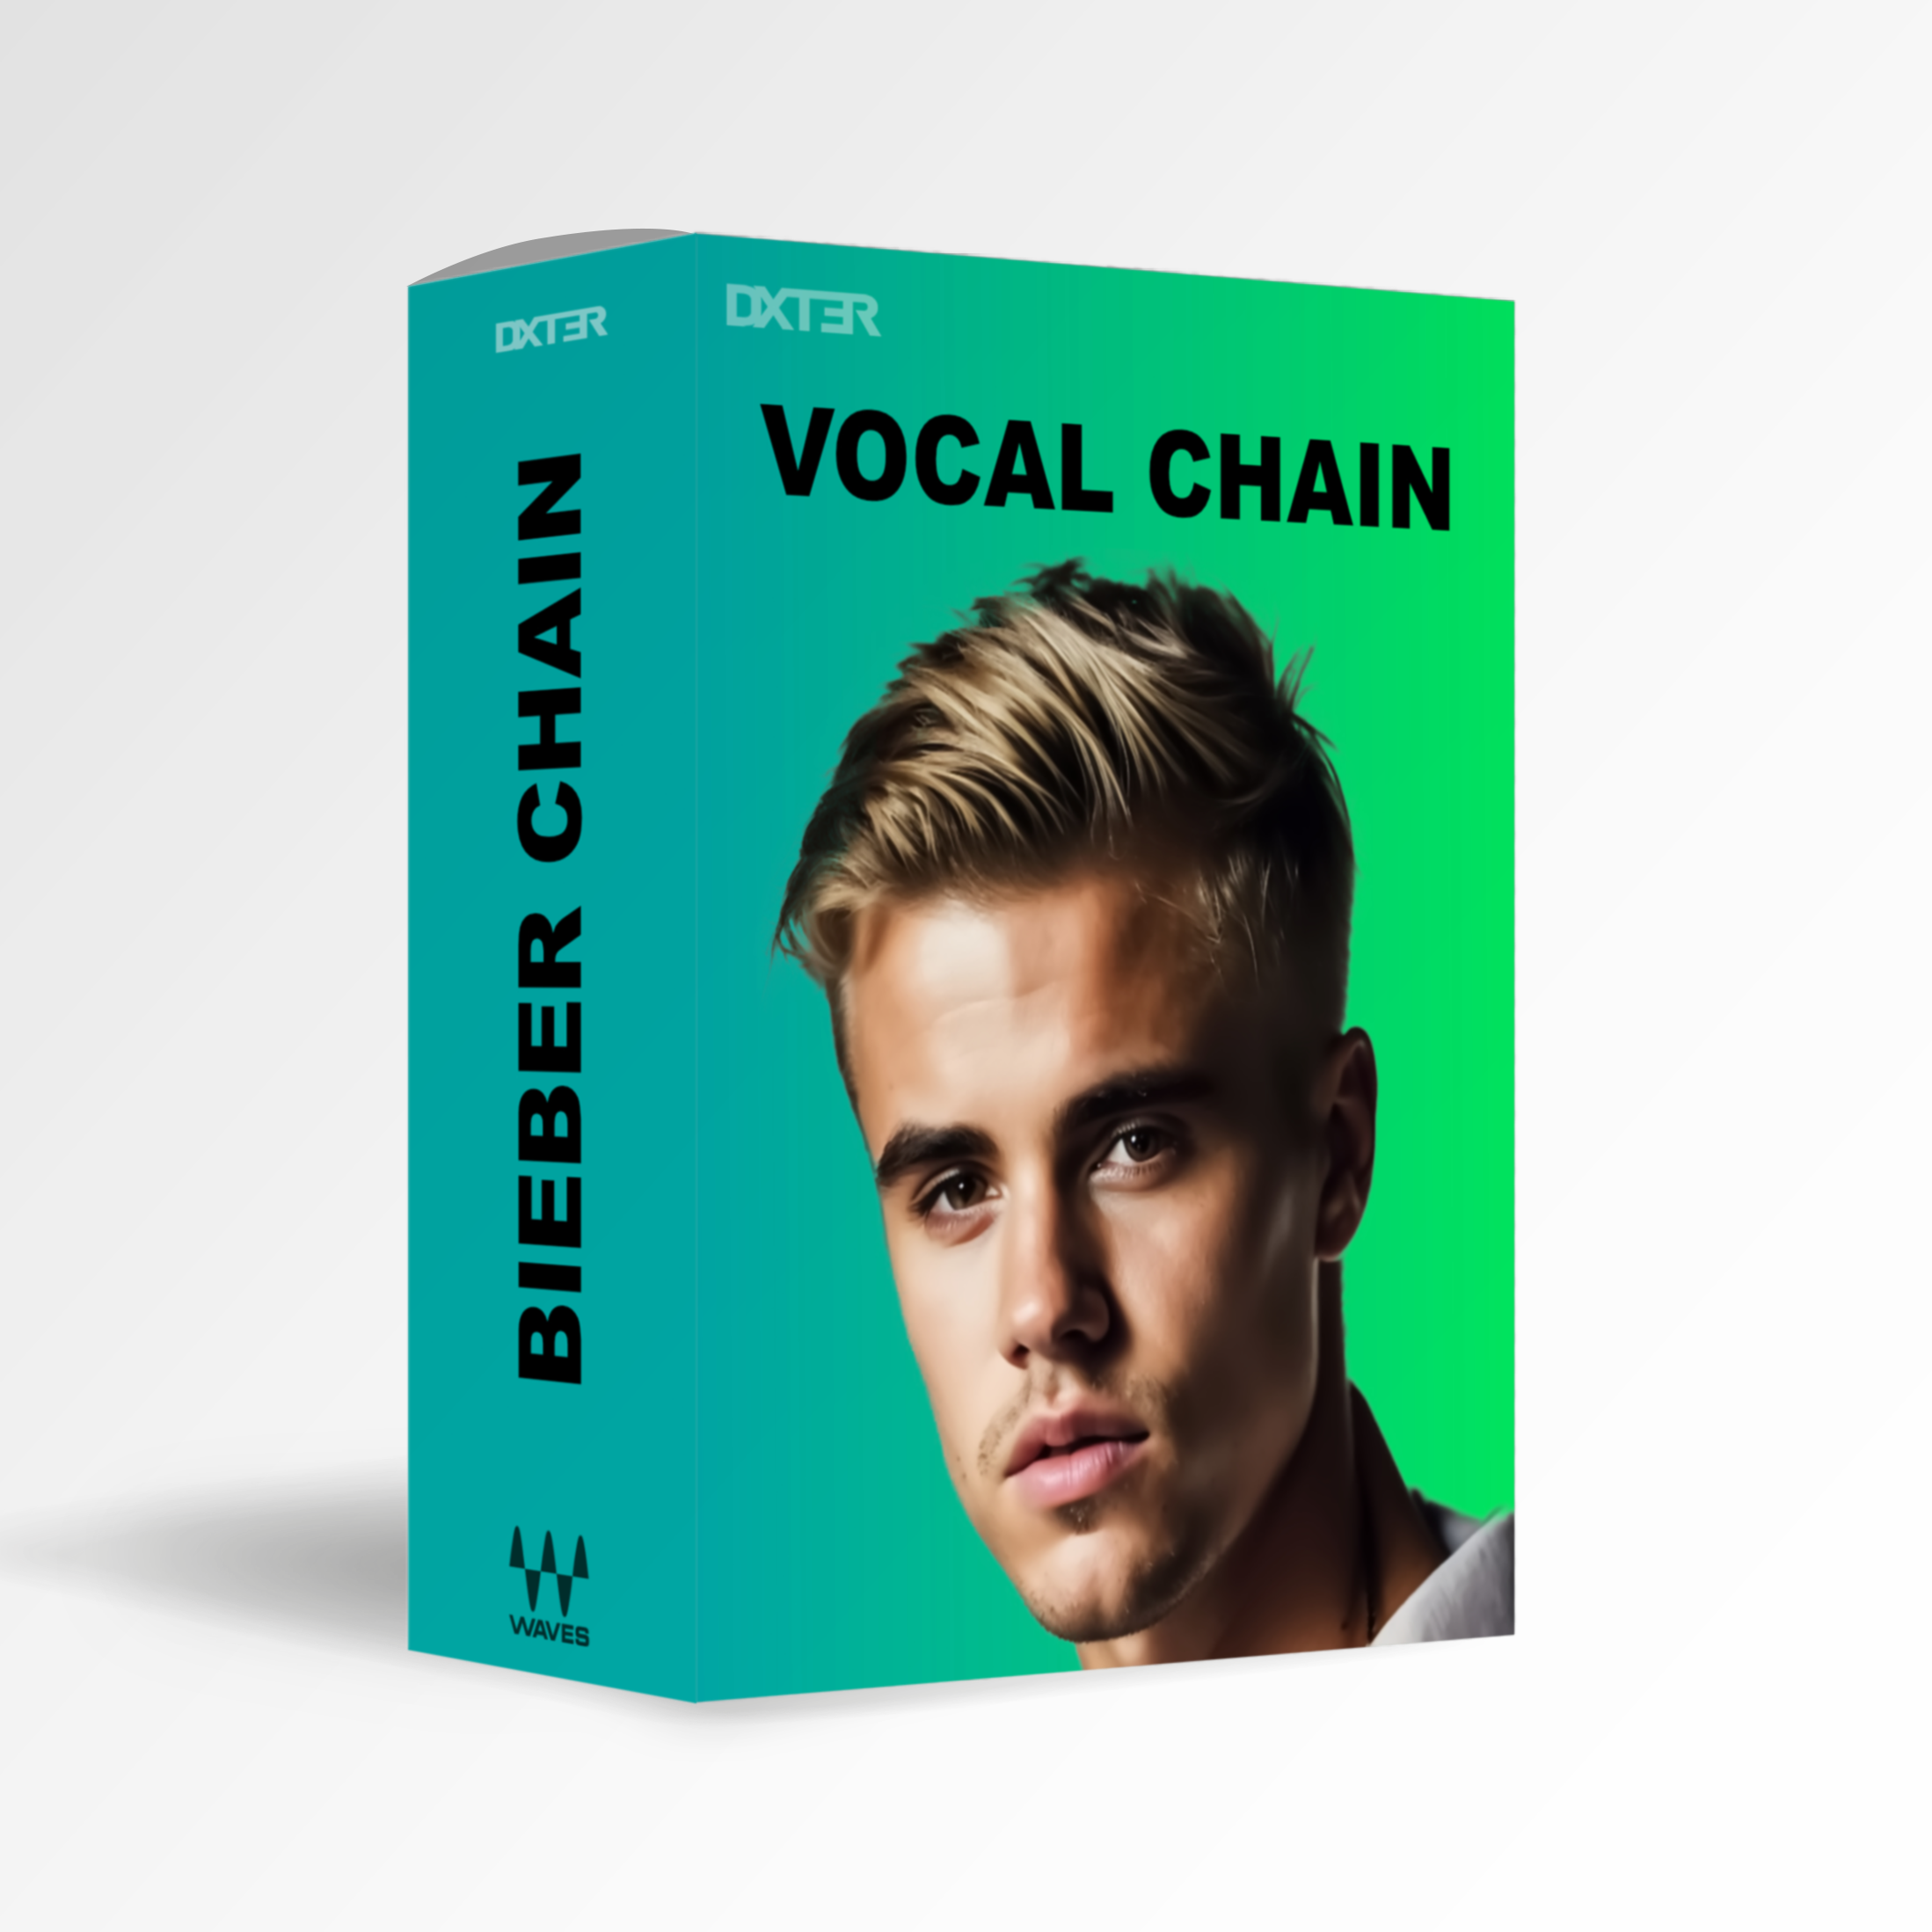 Justin Bieber Type Vocal Chain | DXT3R